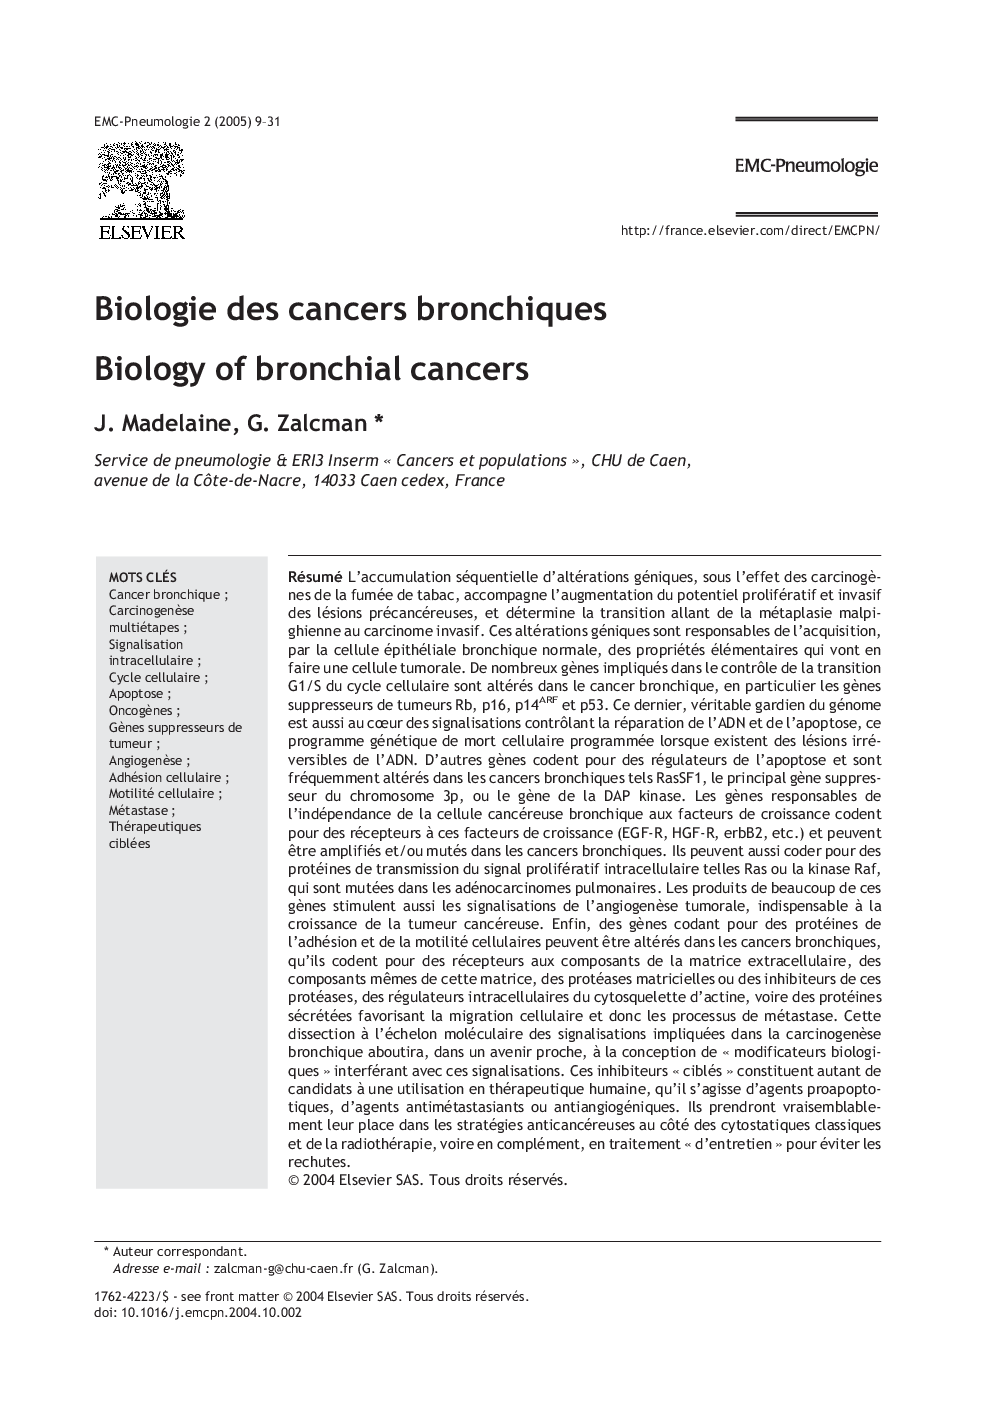 Biologie des cancers bronchiques